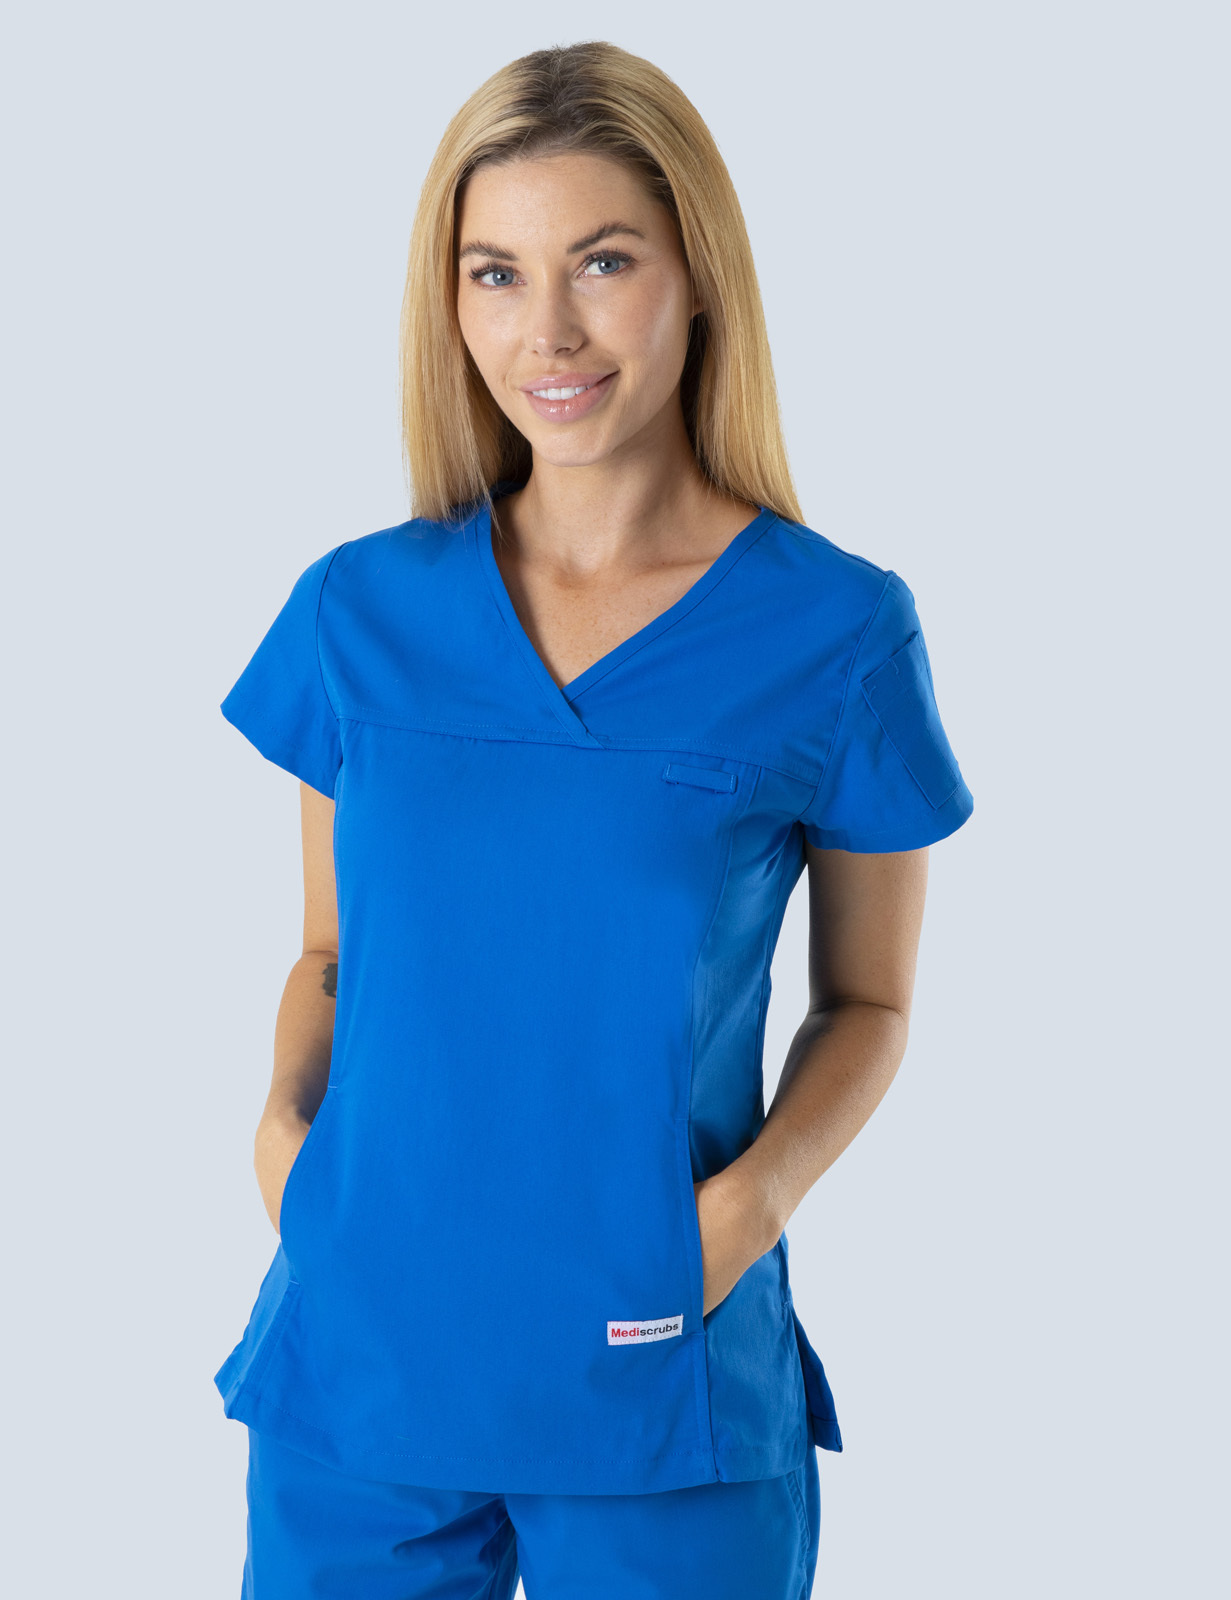 Queensland Children's Hospital Emergency Department Enrolled Nurse Uniform Top Bundle  (Women's Fit Top in Royal incl Logos)